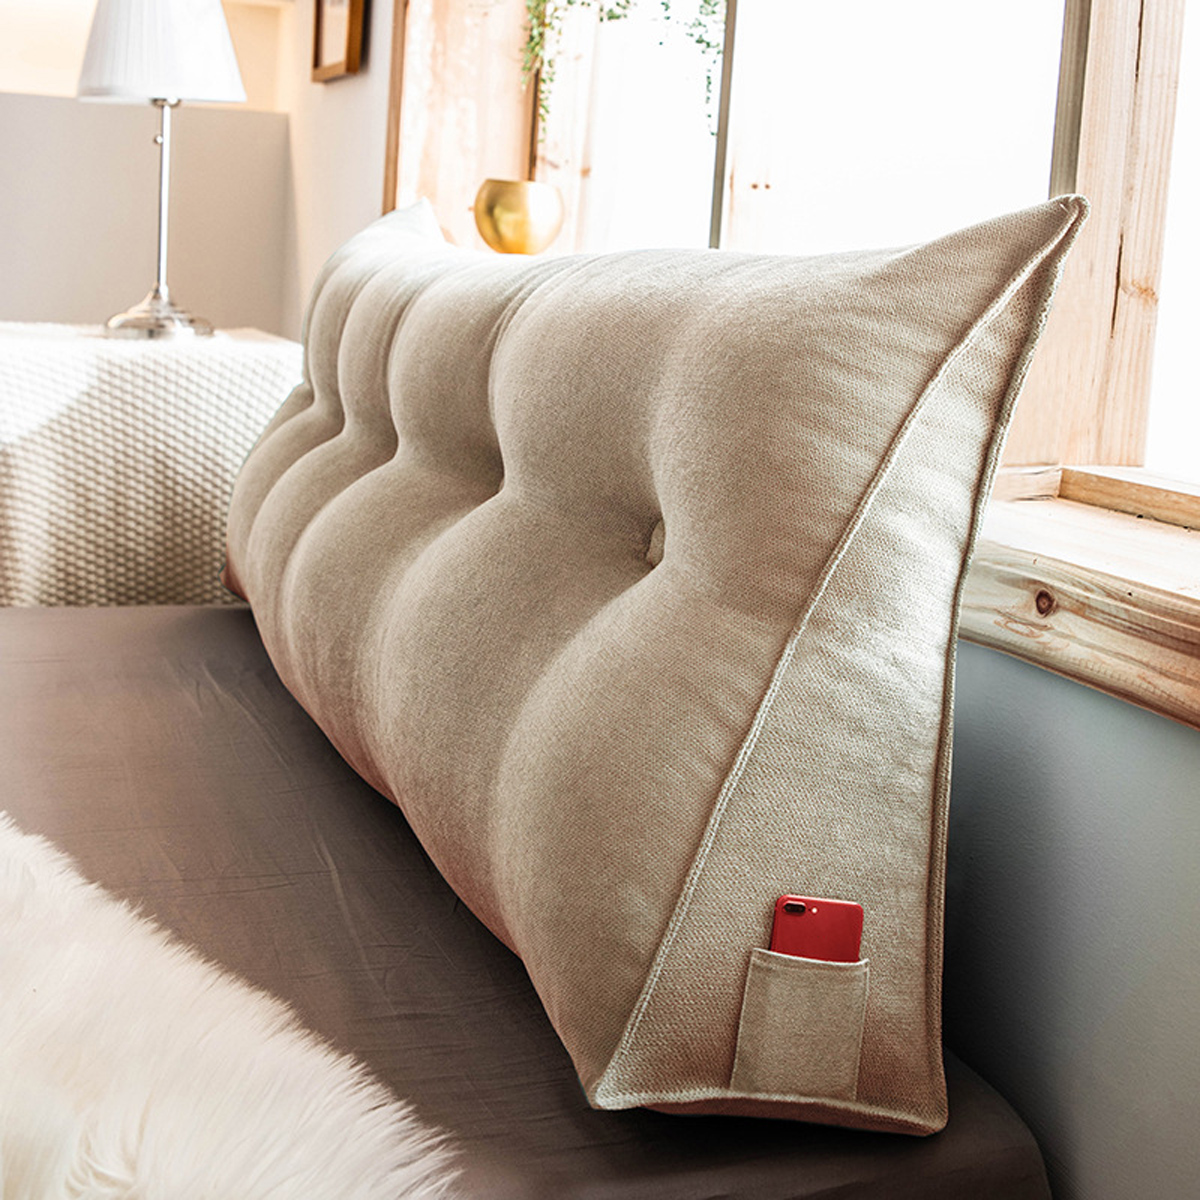 Подушки спинки купить. Bed rest Pillow подушка. Треугольная подушка. Подушки для спинки дивана. Большие подушки для дивана спинка.